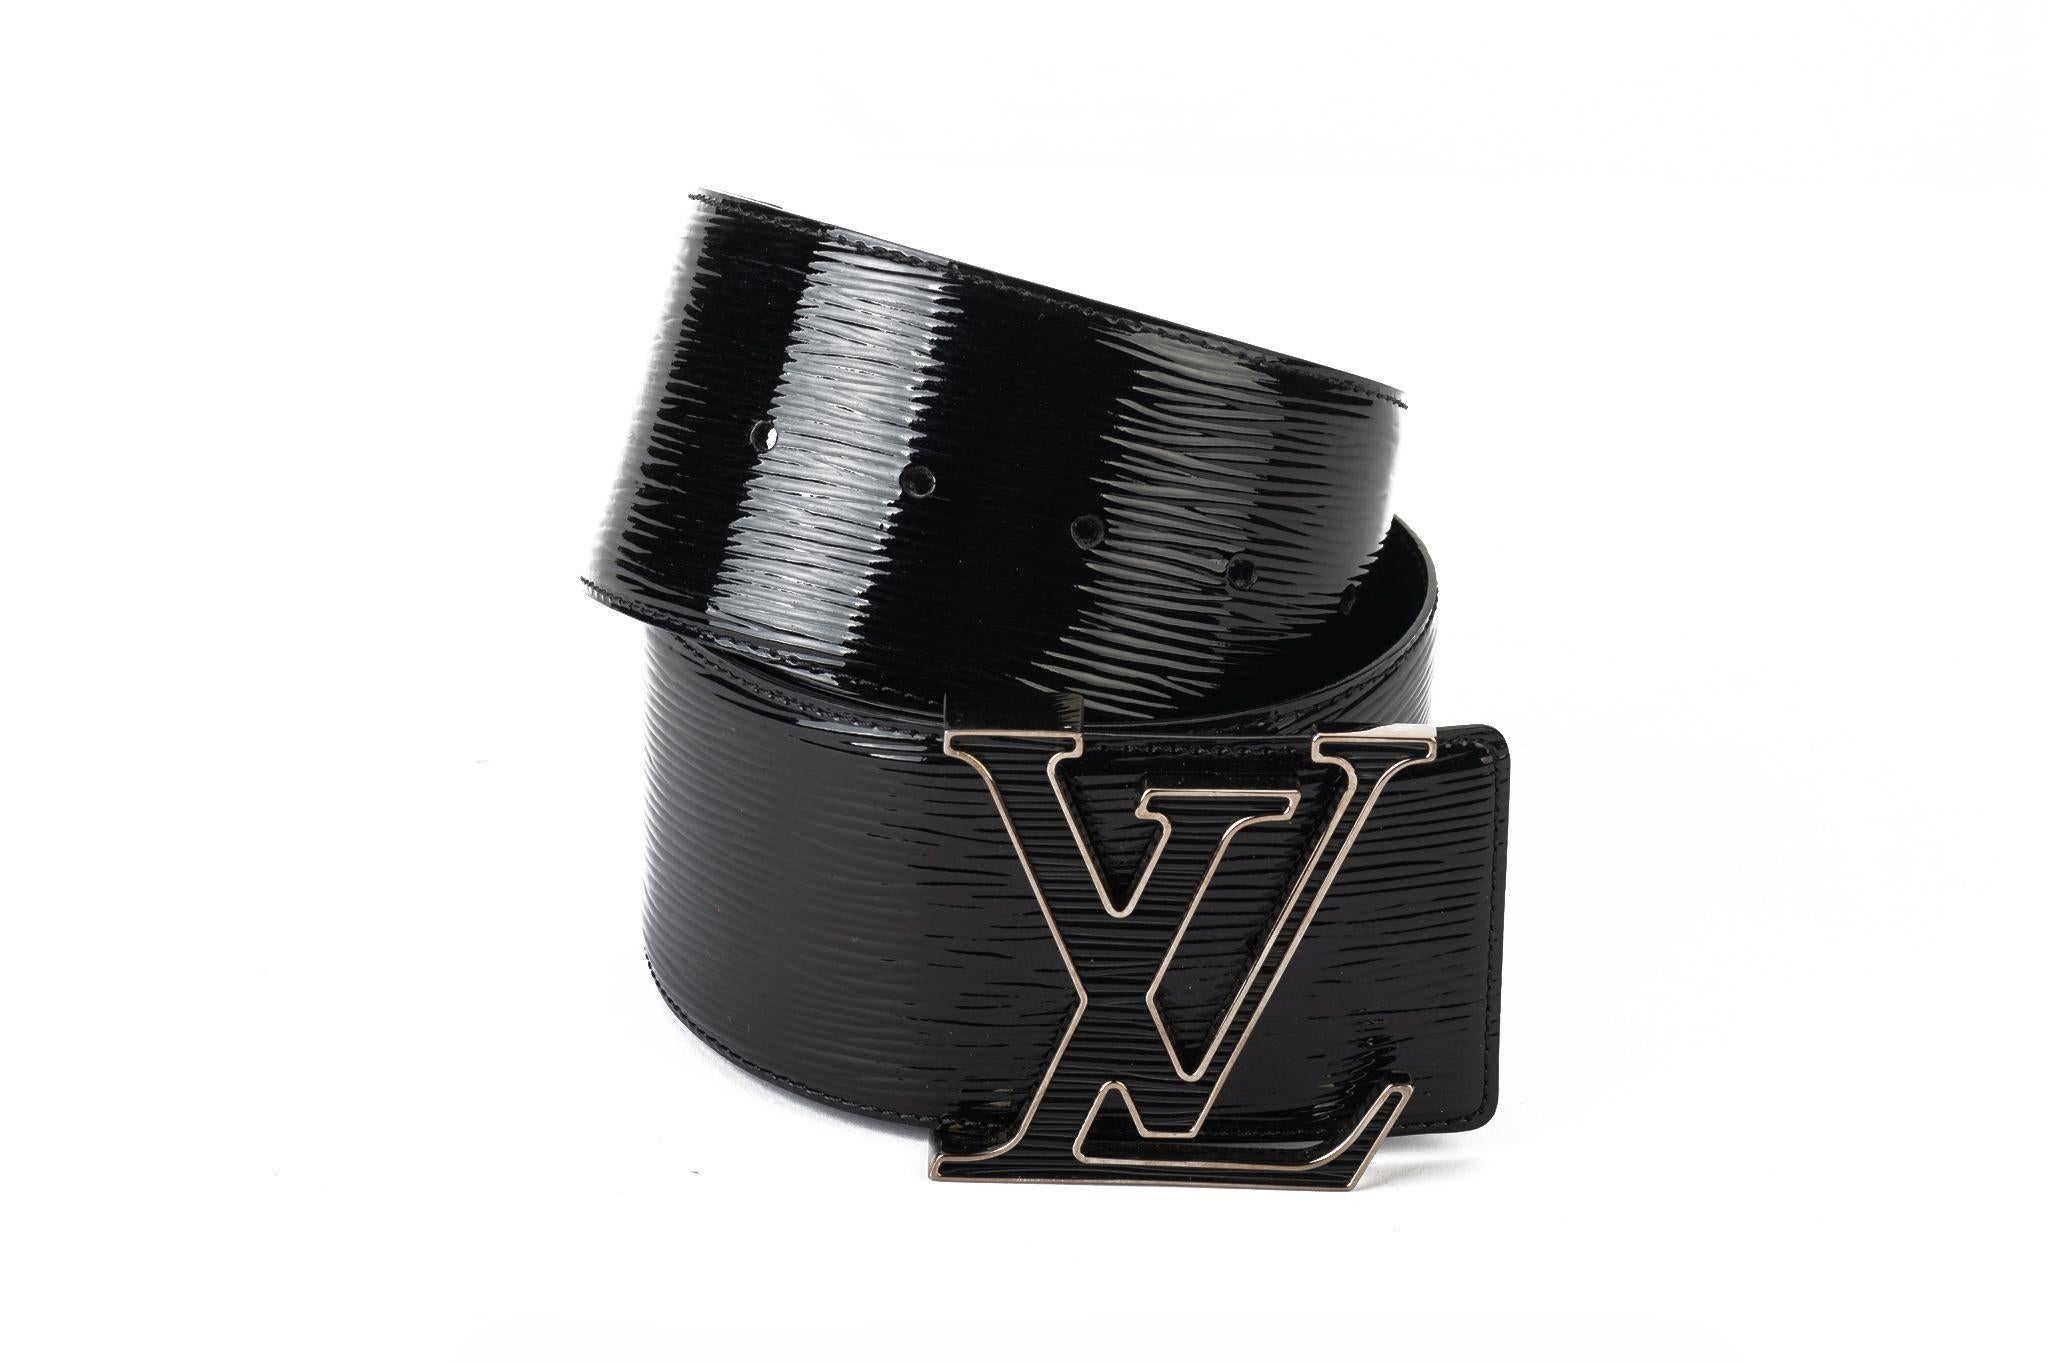 Louis Vuitton excellent condition black patent leather wide belt with oversize enamel LV buckle. 75cm/30”. Original dust cover and box.